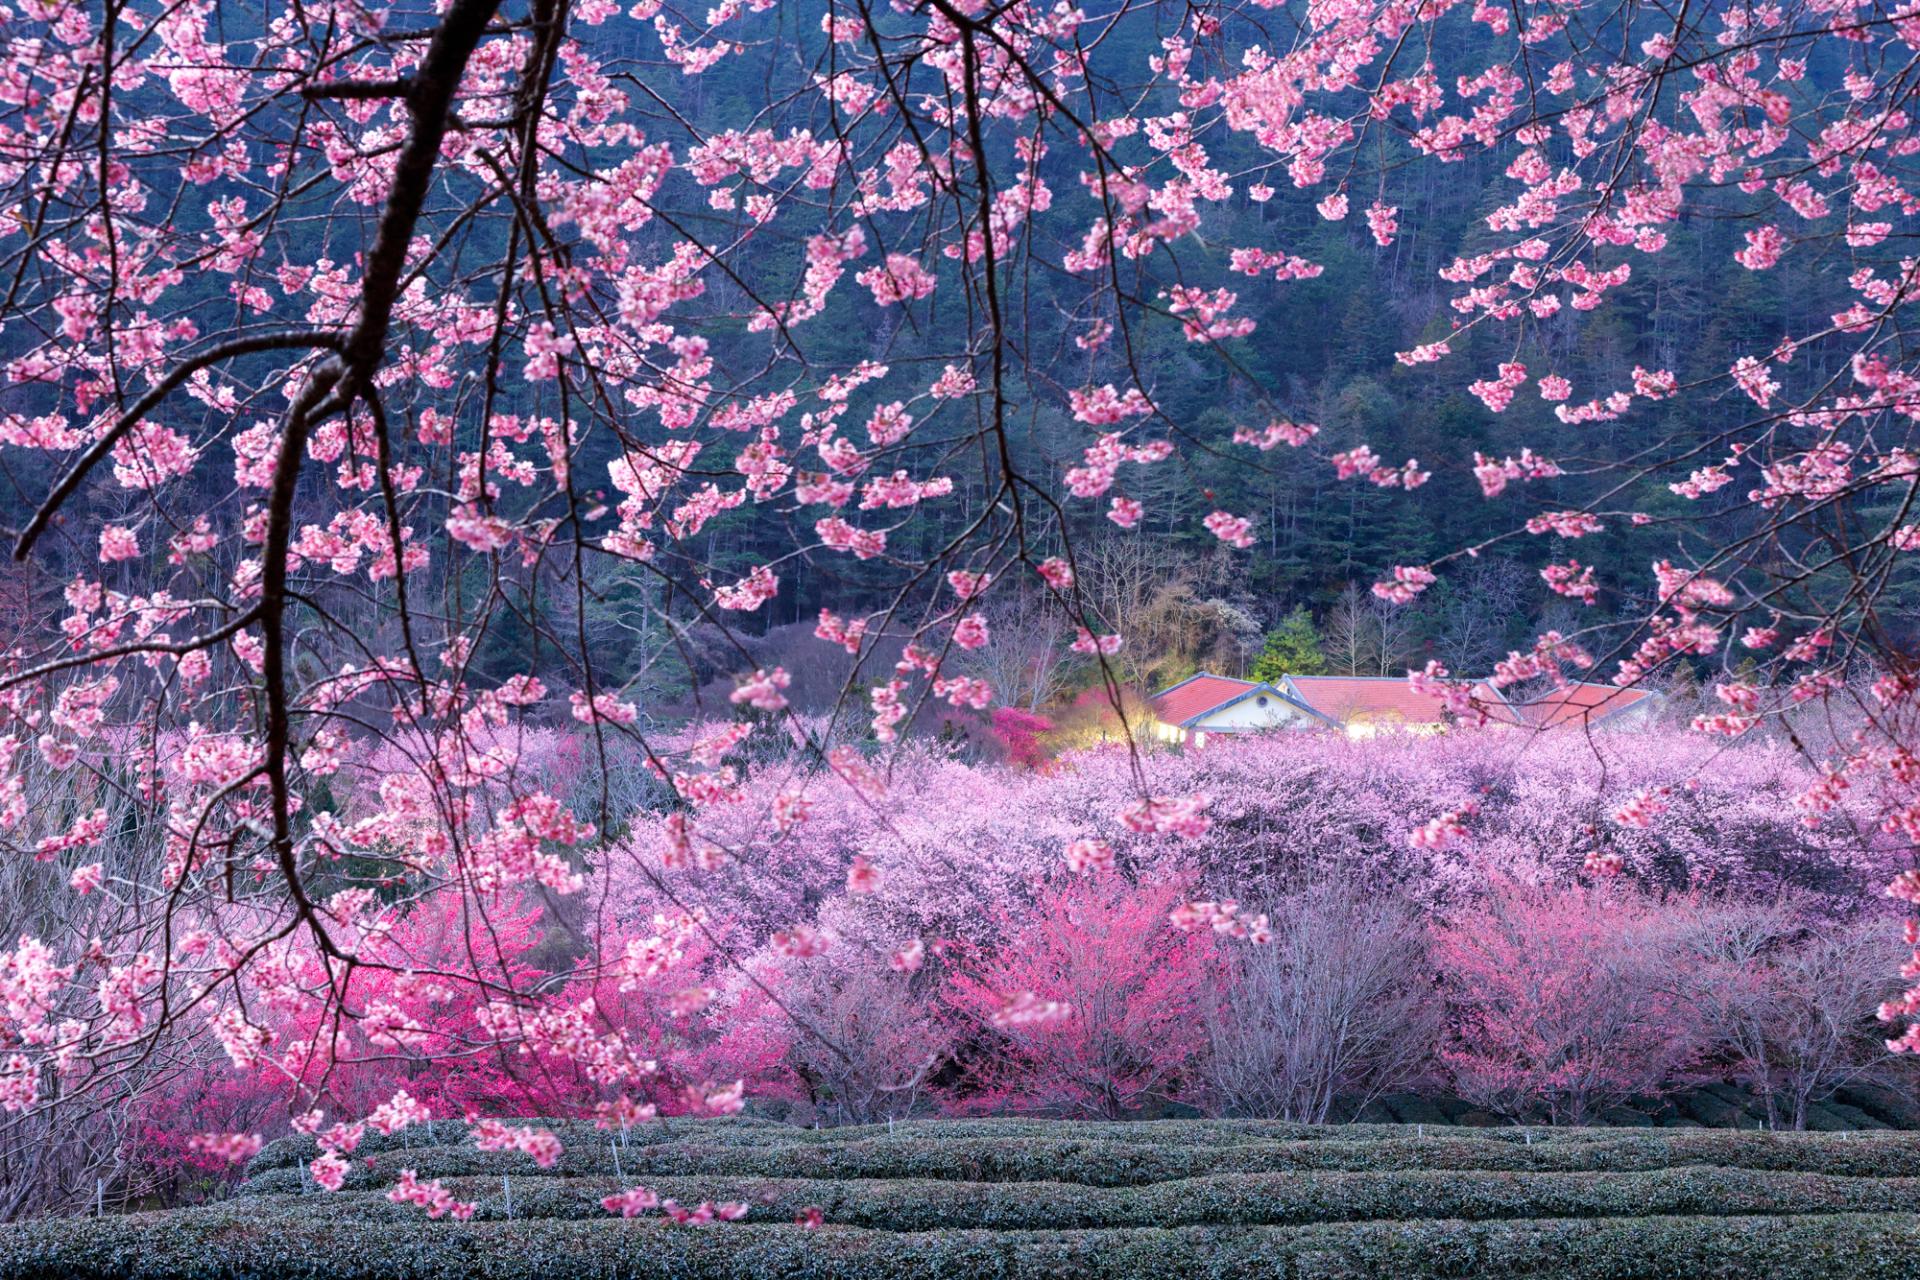 New York Photography Awards Winner - Cherry blossoms